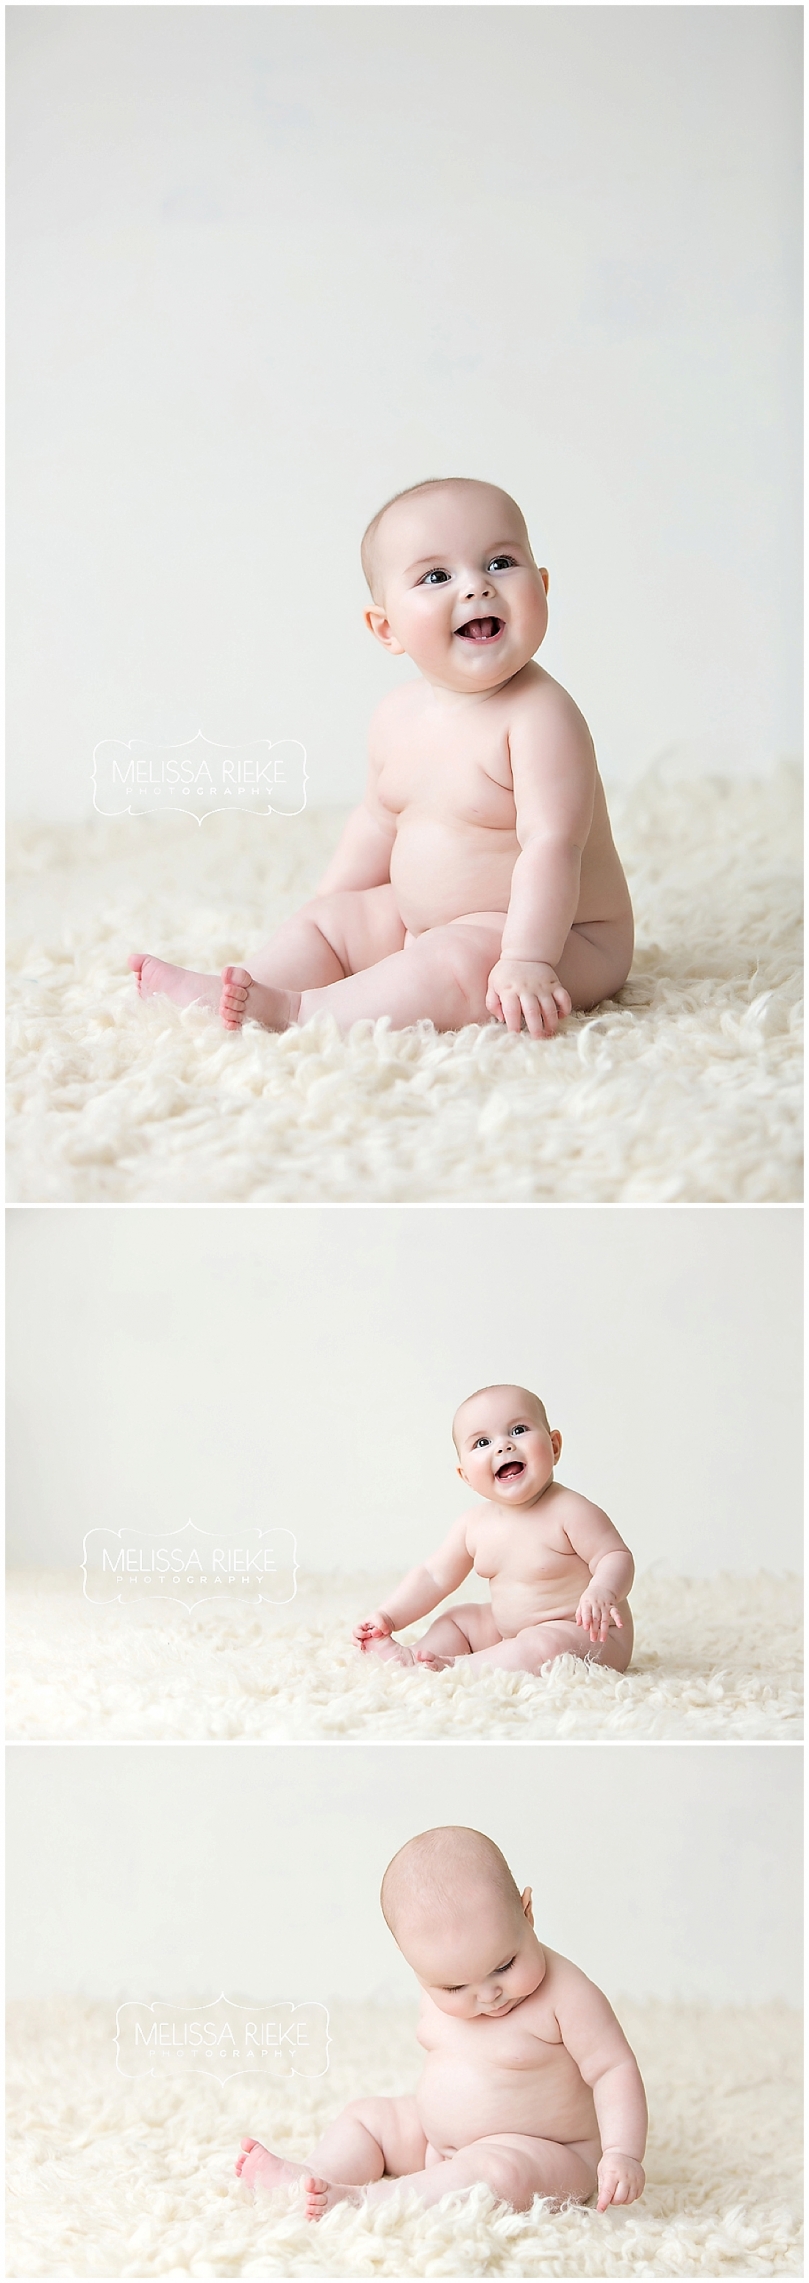 Kansas City Baby Photographer |Melissa Rieke Photography www.melissariekephotography.com